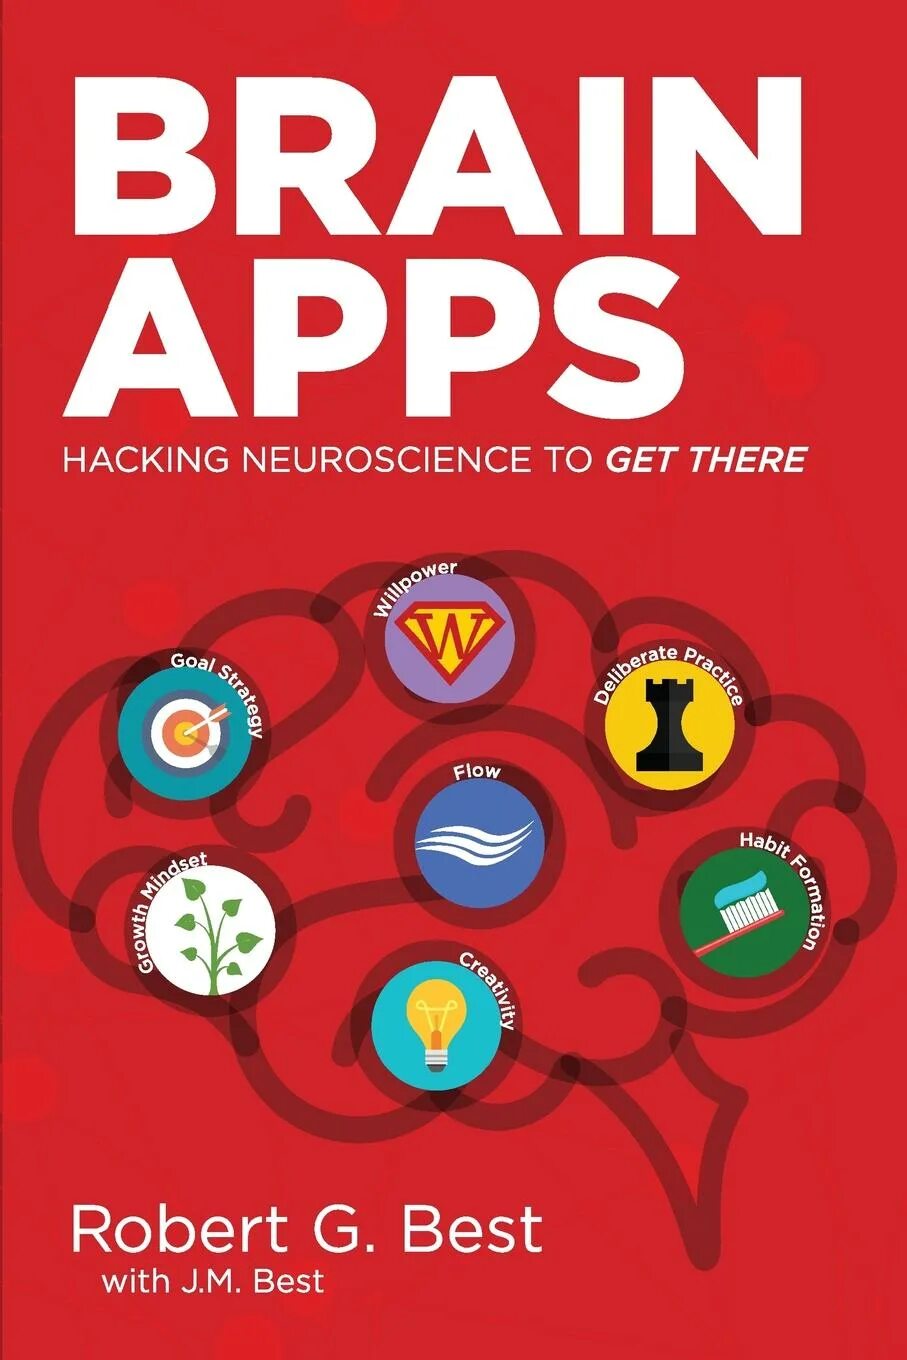 Brain apps. Brain Hacking.